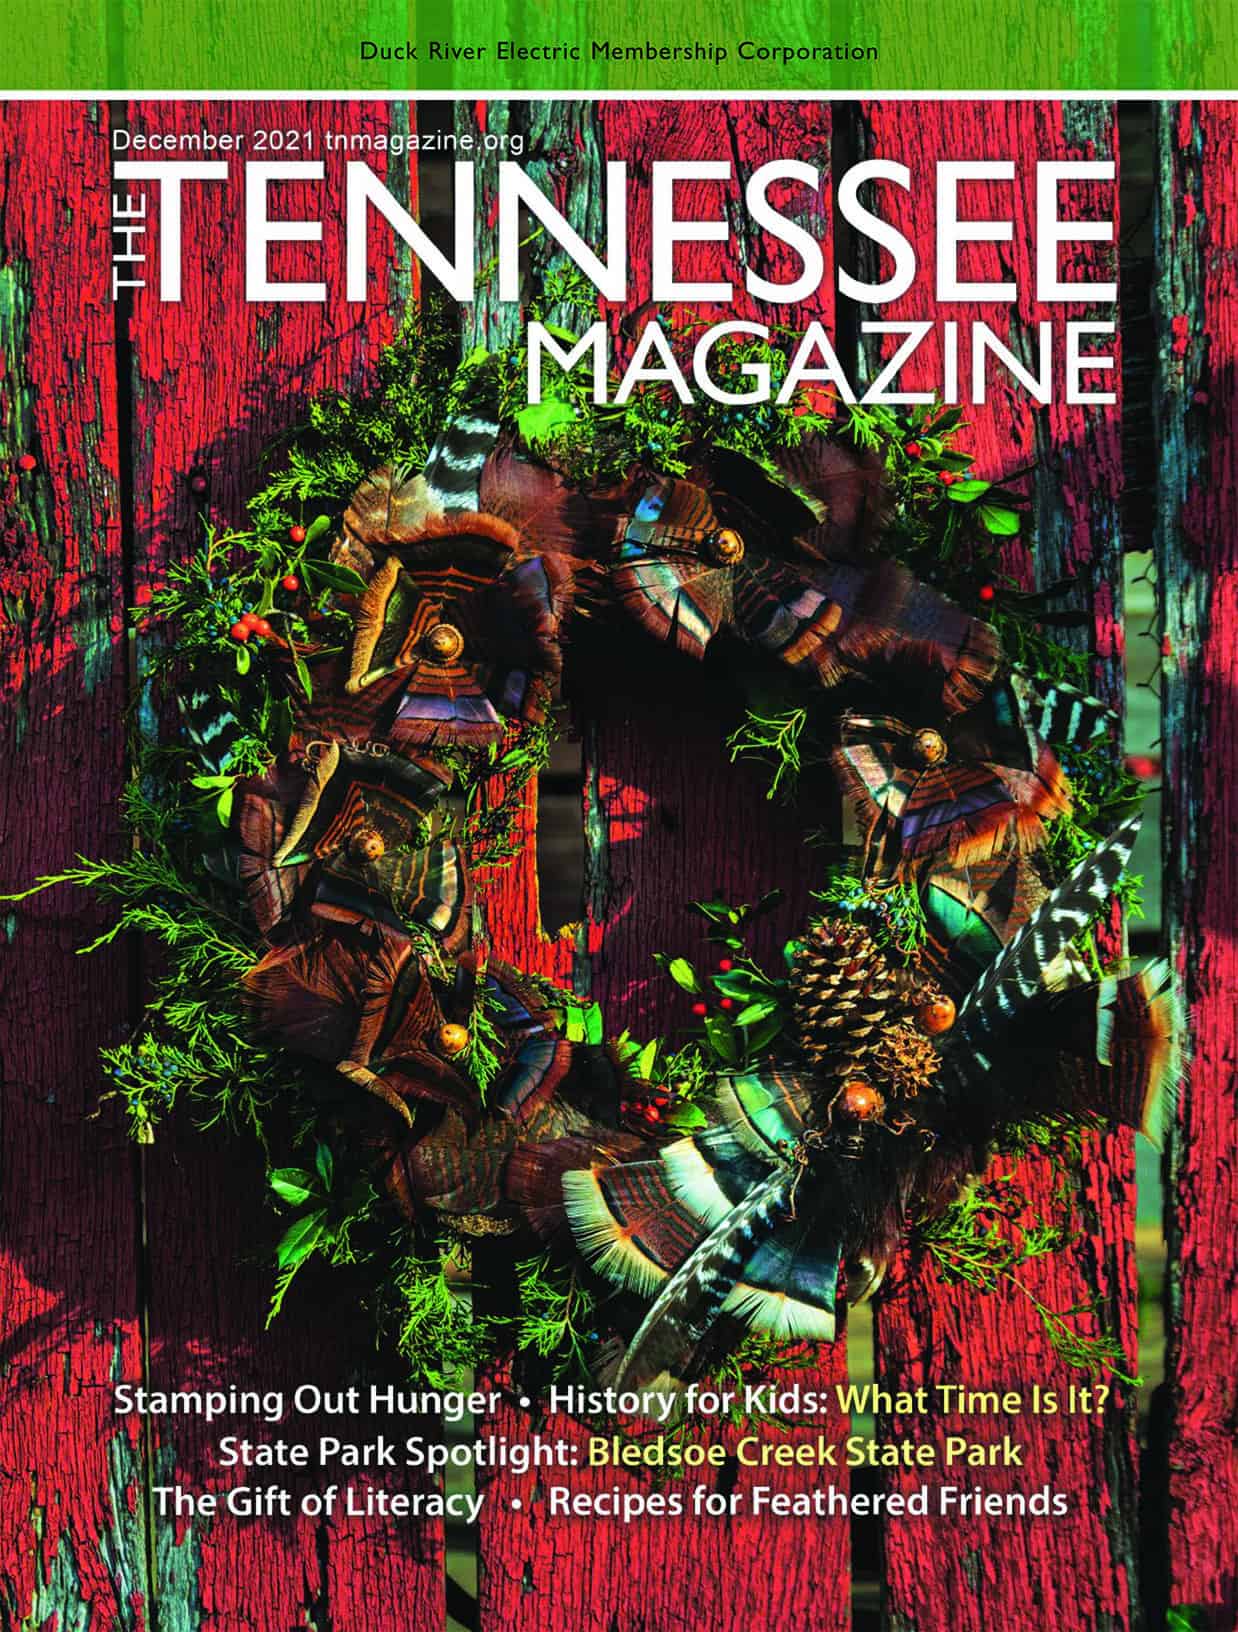 December 2021 magazine cover